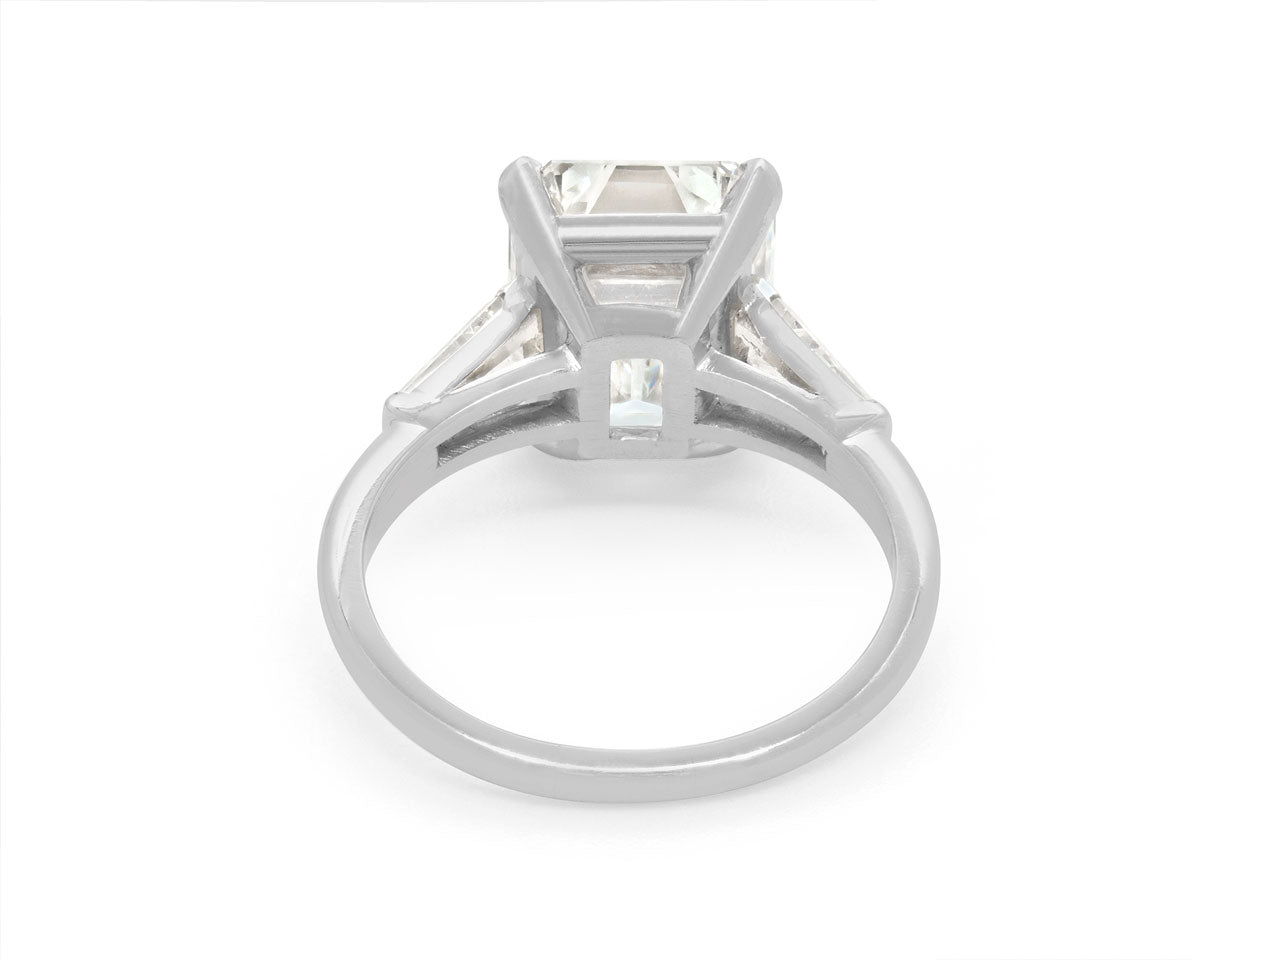 Emerald Cut Diamond, 4.67 Carats E/VS1, in Platinum